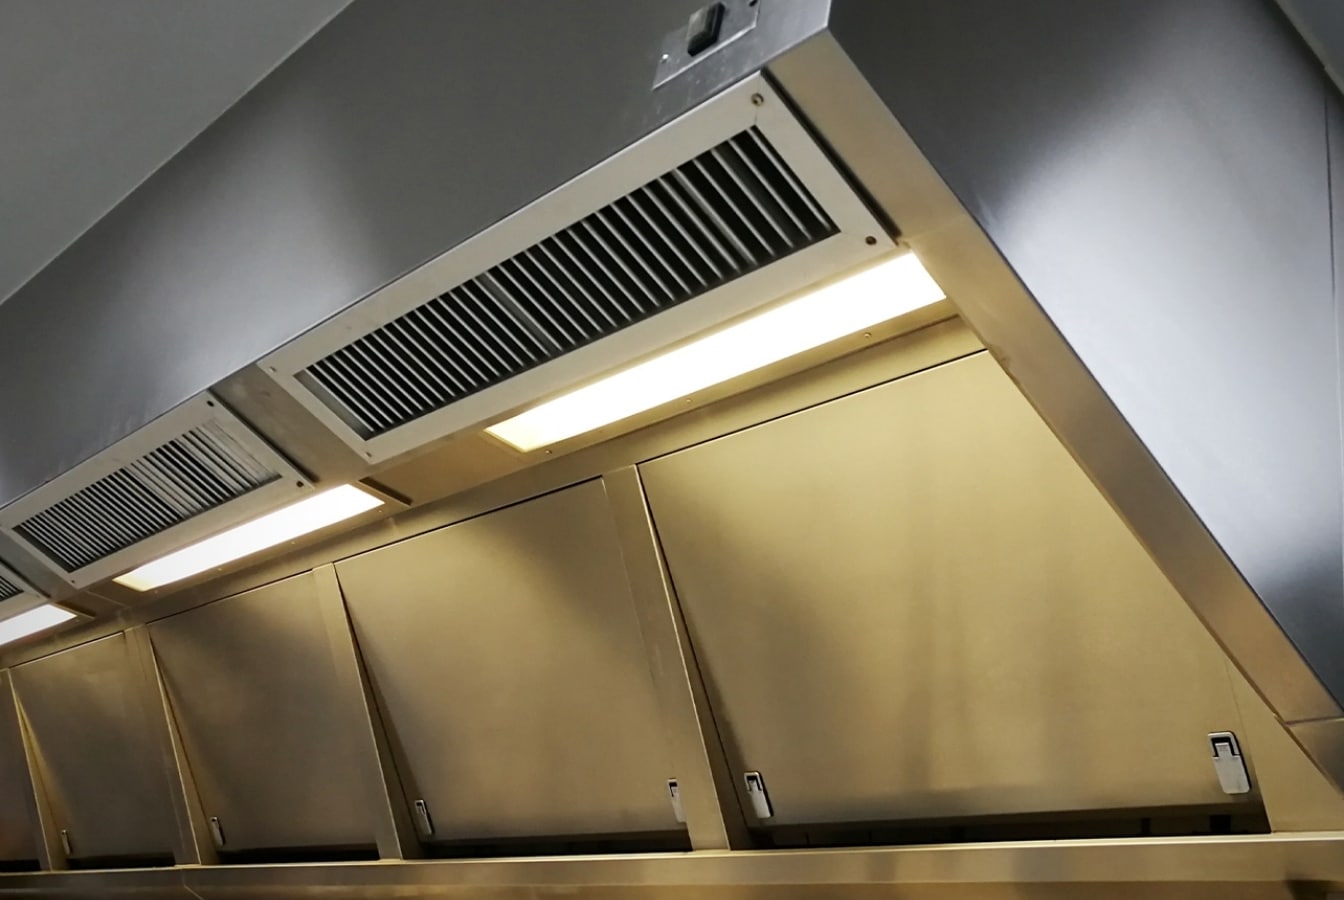 a clean commercial kitchen ventilation system in a restaurant kitchen